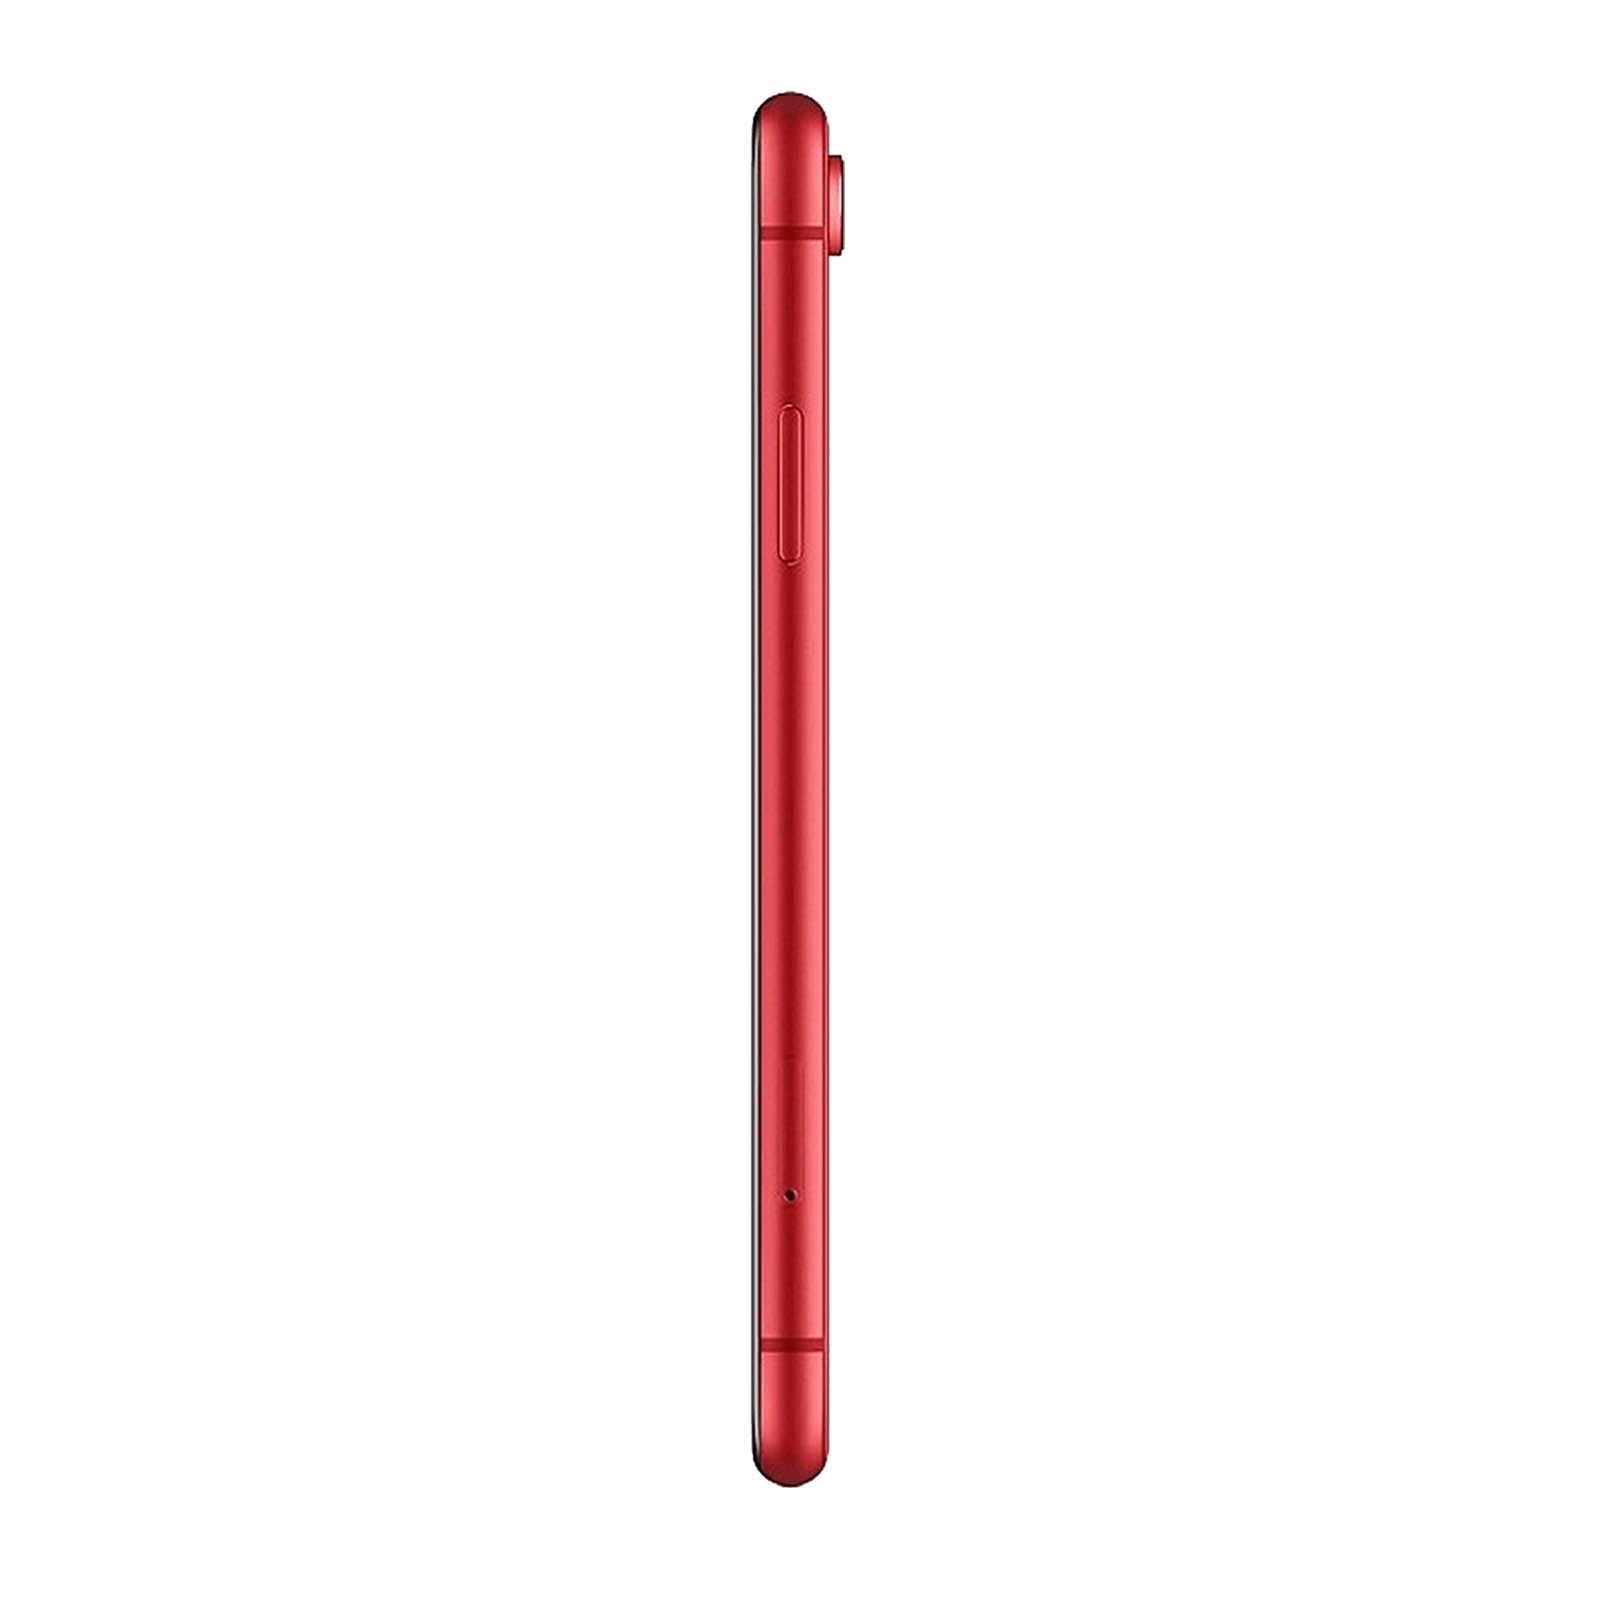 Apple iPhone XR 64GB Product Red Fair - Unlocked